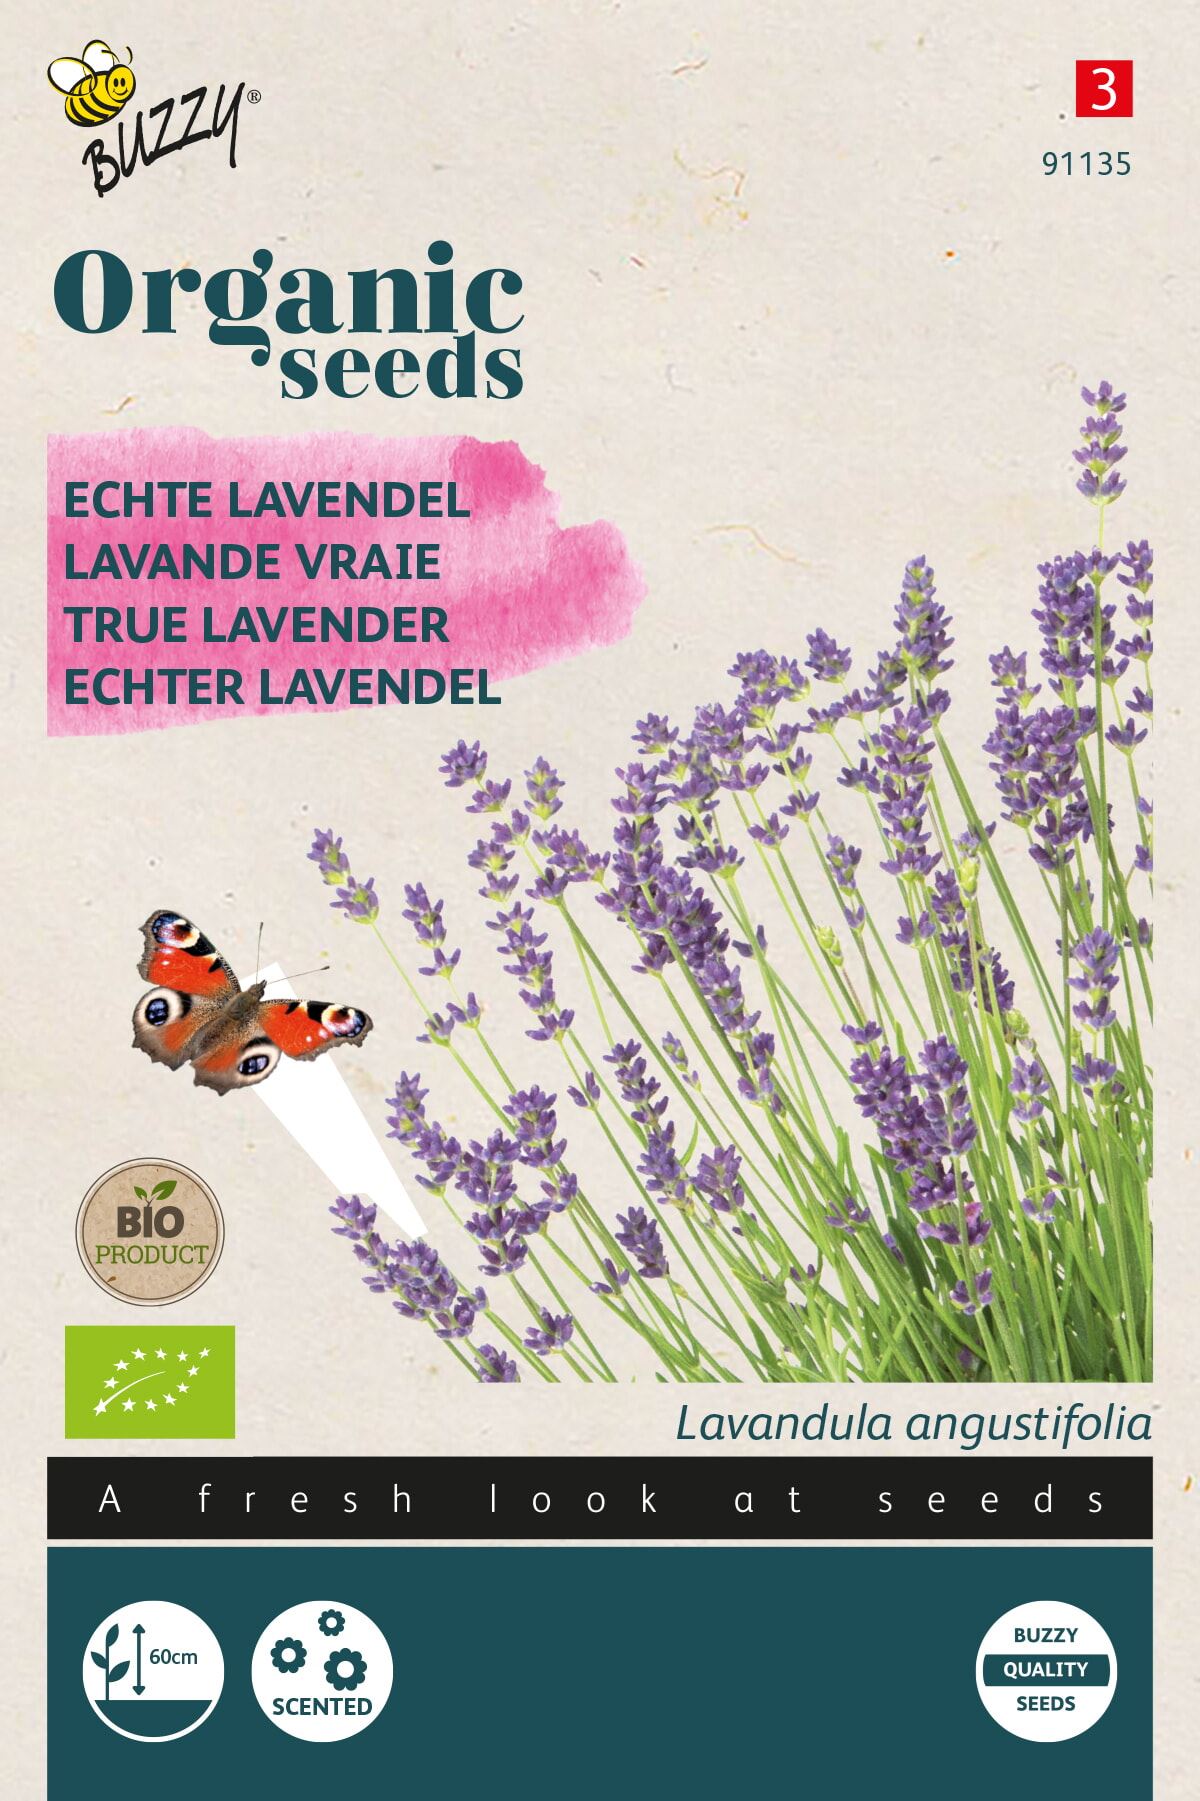 Buzzy® Bio Lavendel zaden